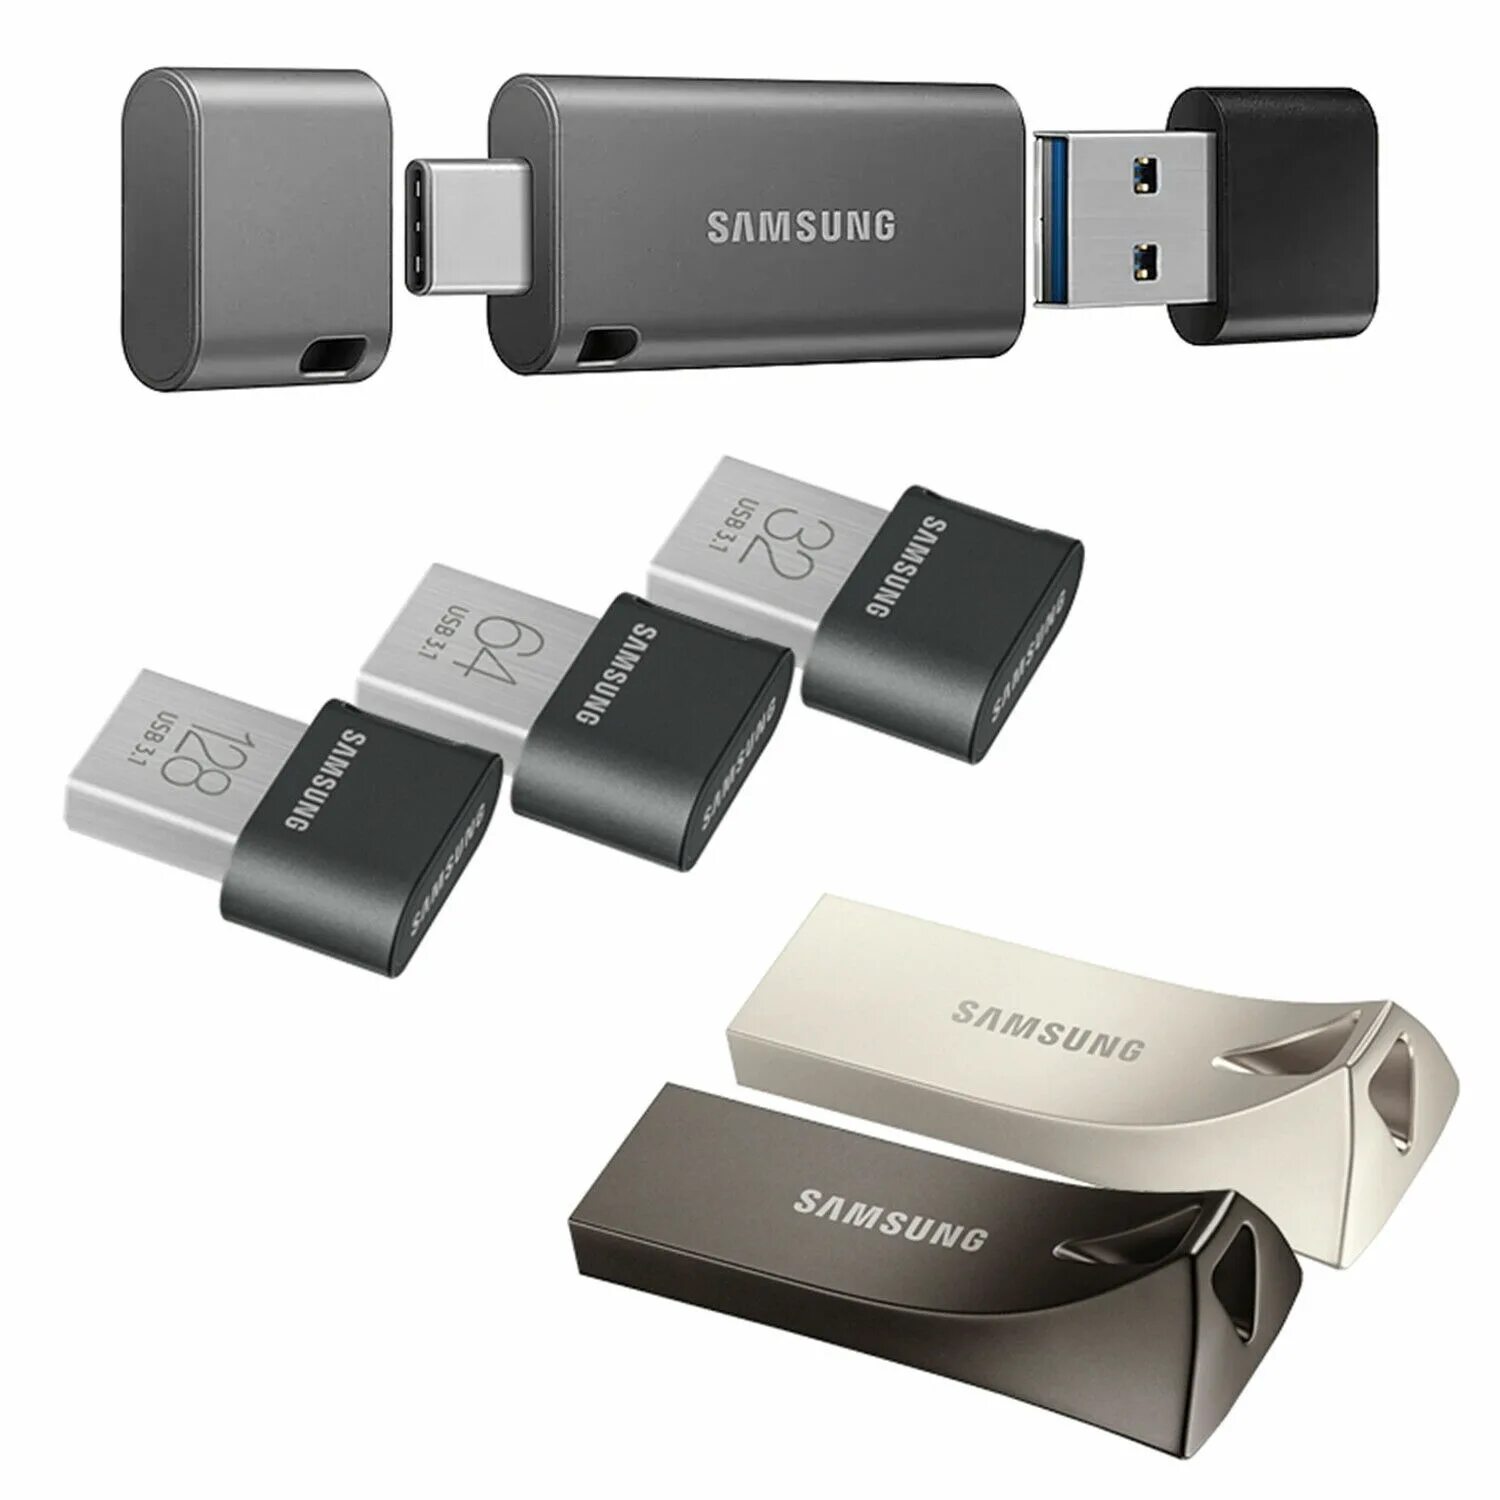 Samsung USB 3.1 Flash Drive Duo Plus. Samsung USB 3.1 Flash Drive Fit Plus. Флешка Samsung USB 3.1 Flash Drive Fit Plus 128gb. Samsung Duo Plus USB 3.1 64gb. Самсунг флешка память